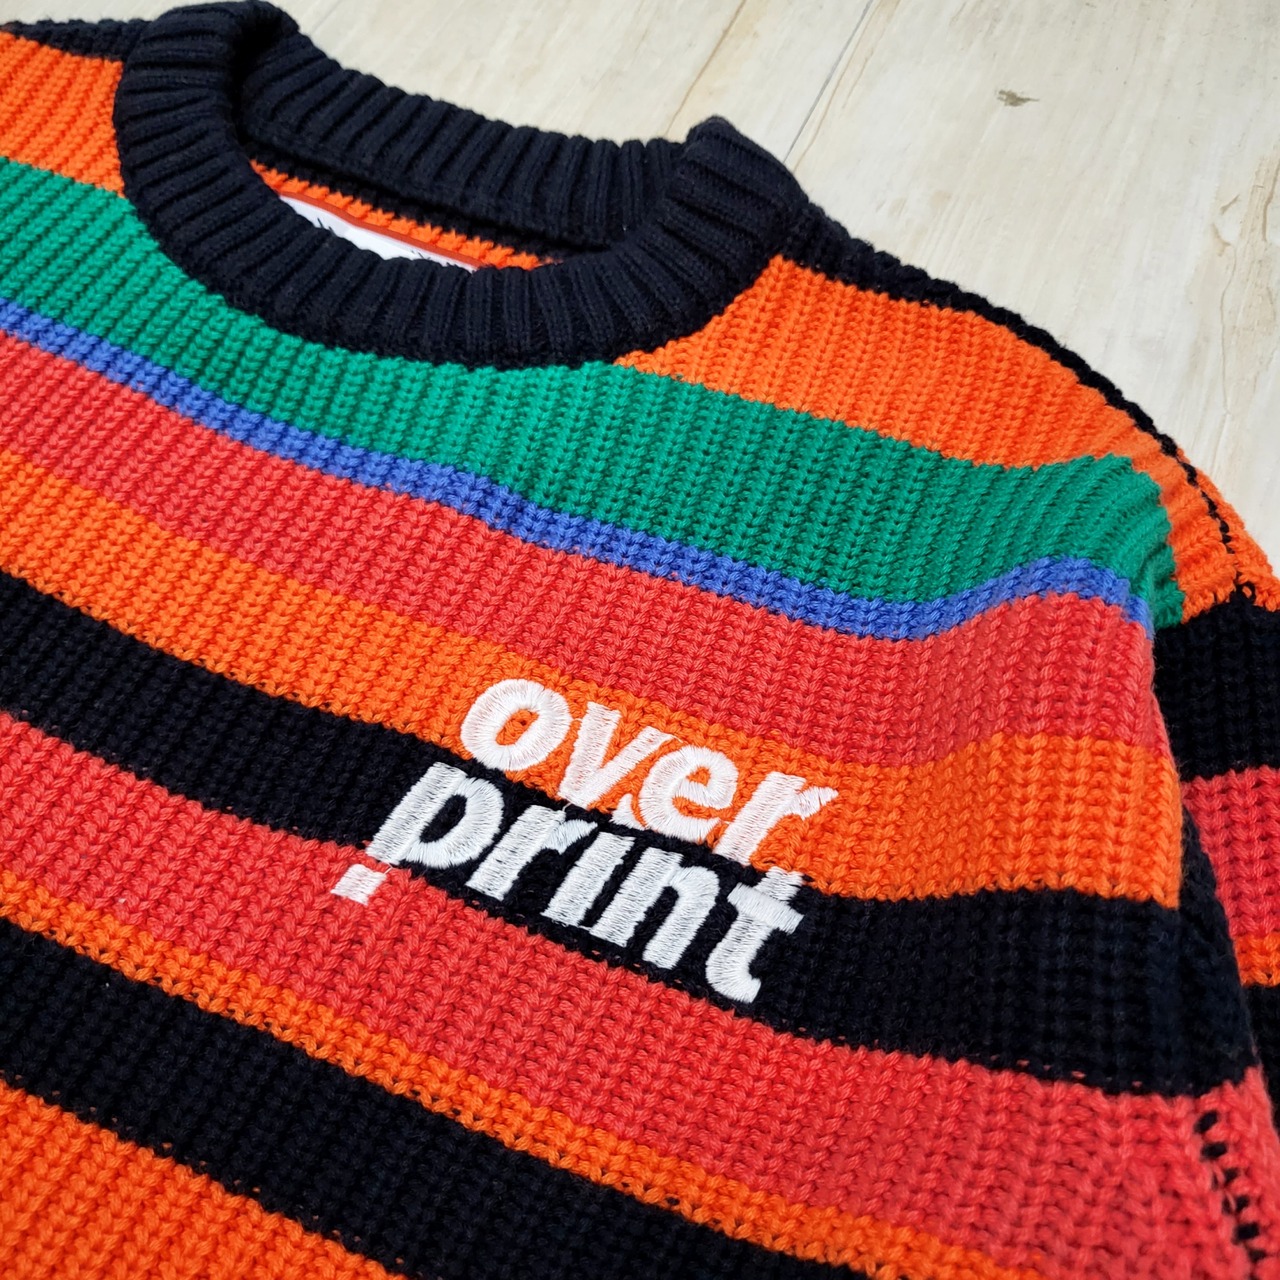 【over print】boader cotton knit